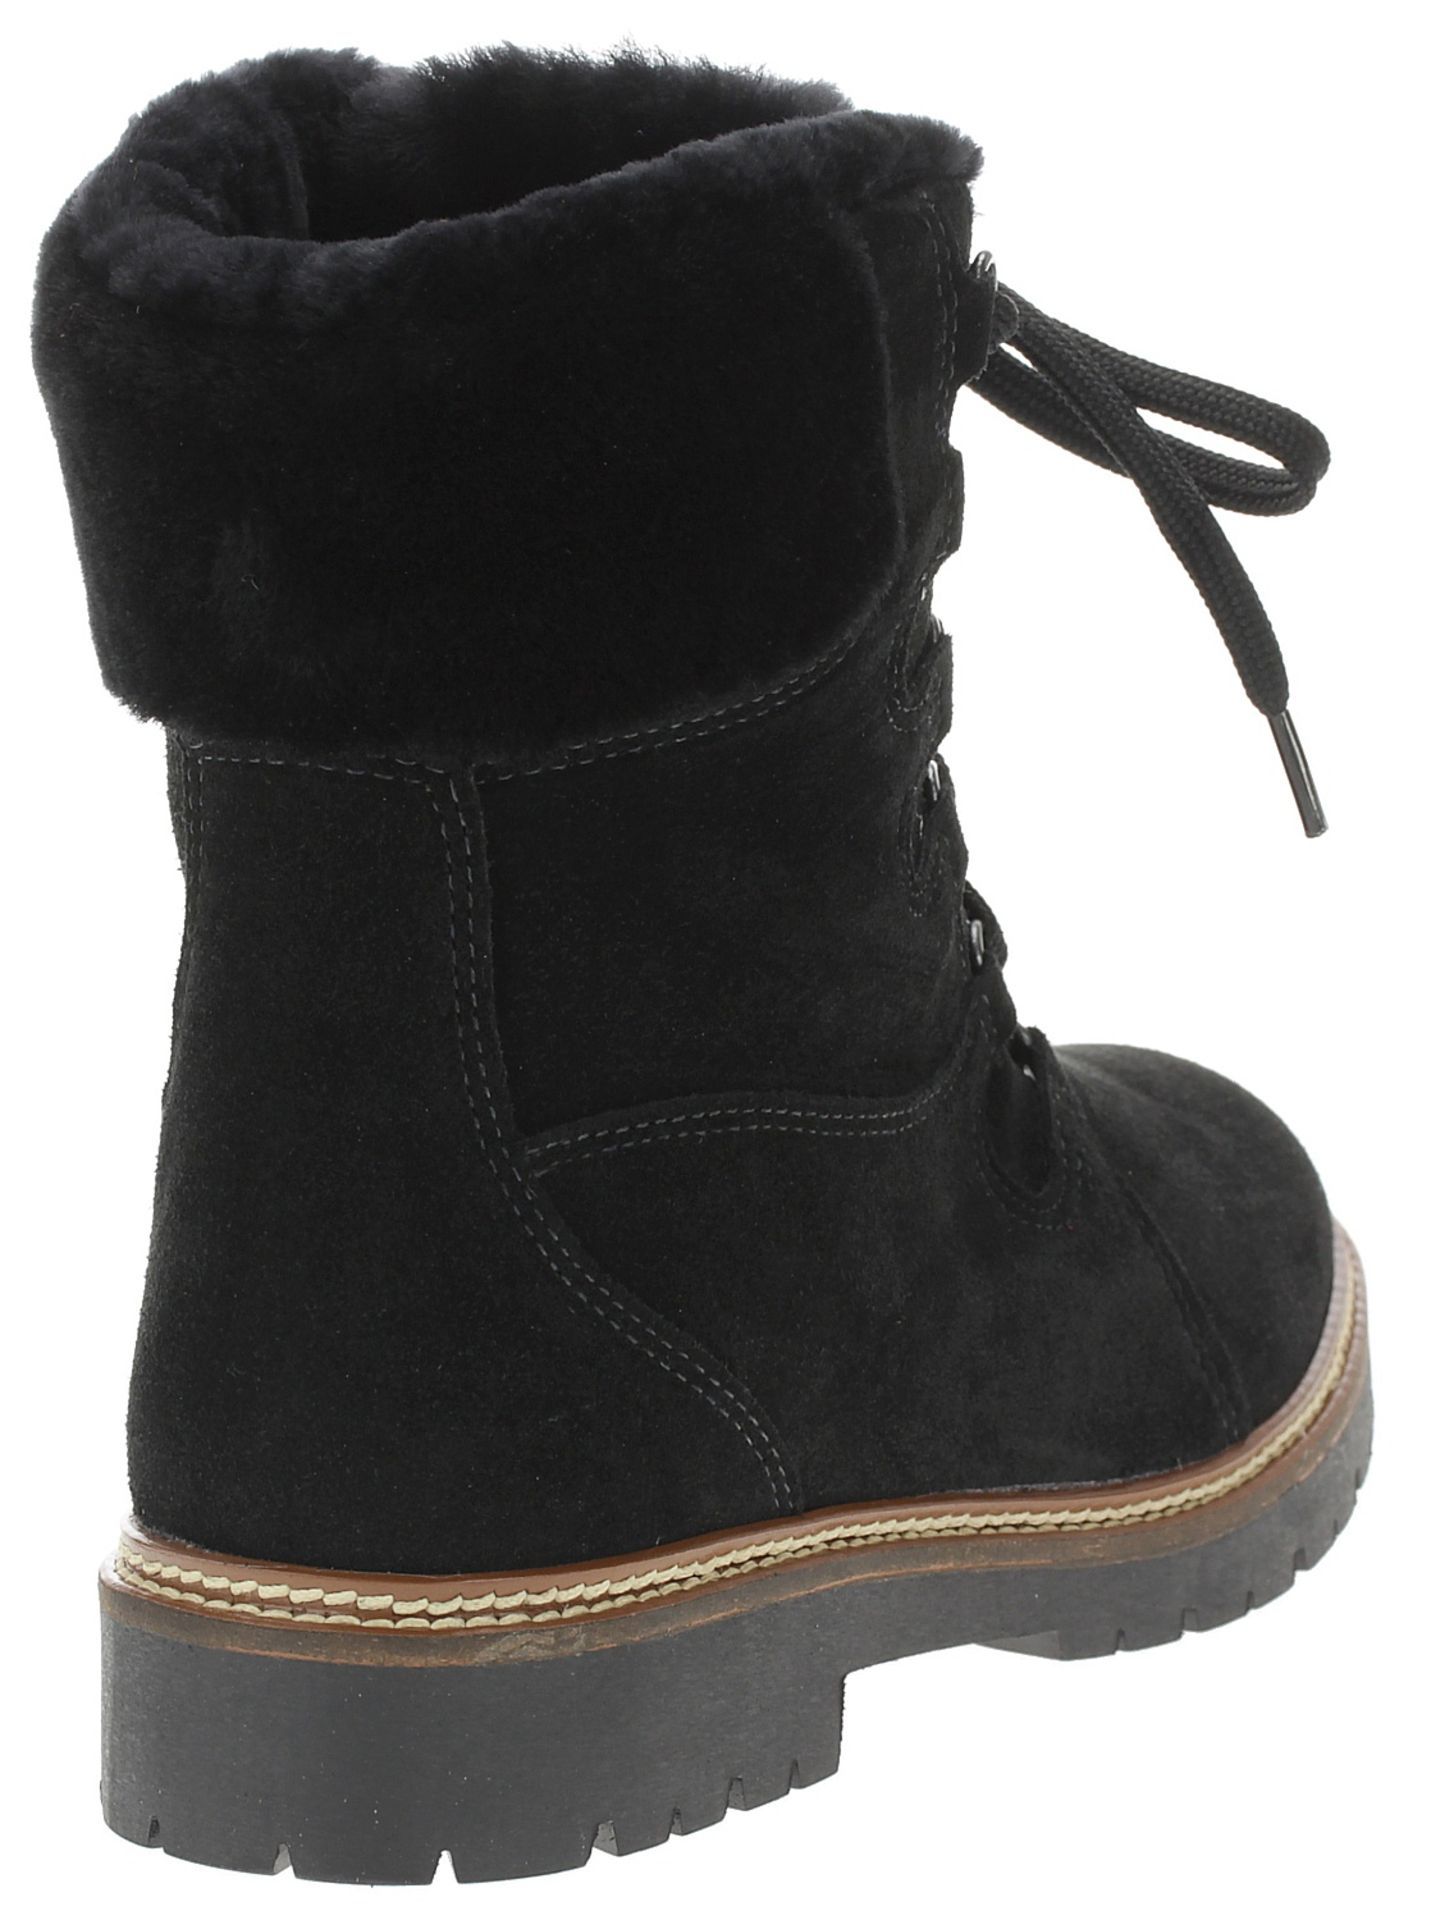 1 x Pair of Designer Olang Meribel 81 Nero Women's Winter Boots - Euro Size 39 - Brand New Boxed - Image 3 of 5